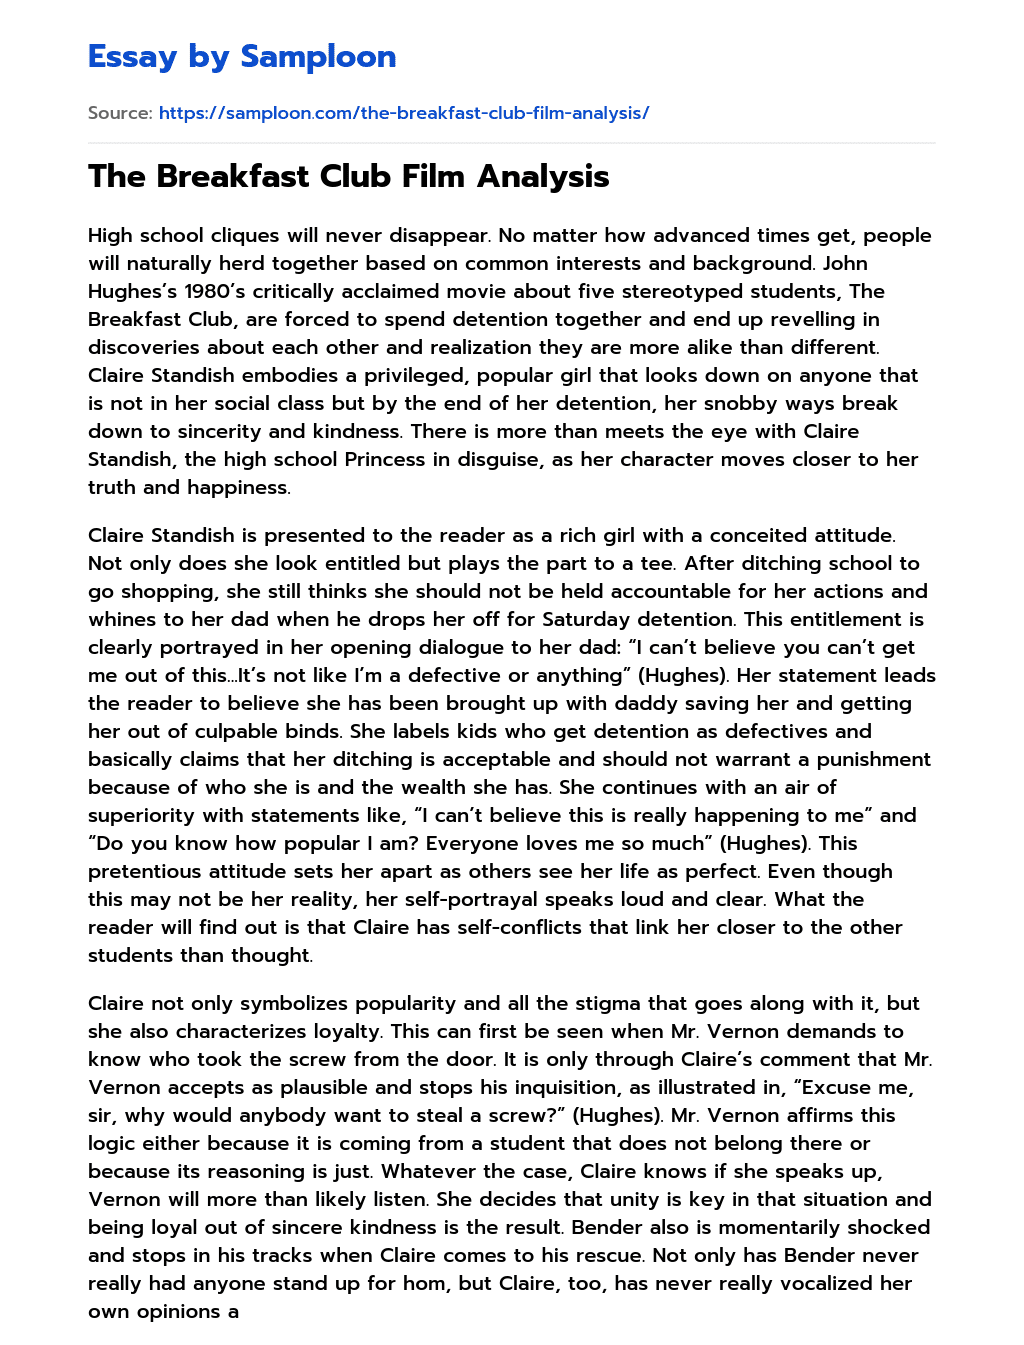 The Breakfast Club Film Analysis essay